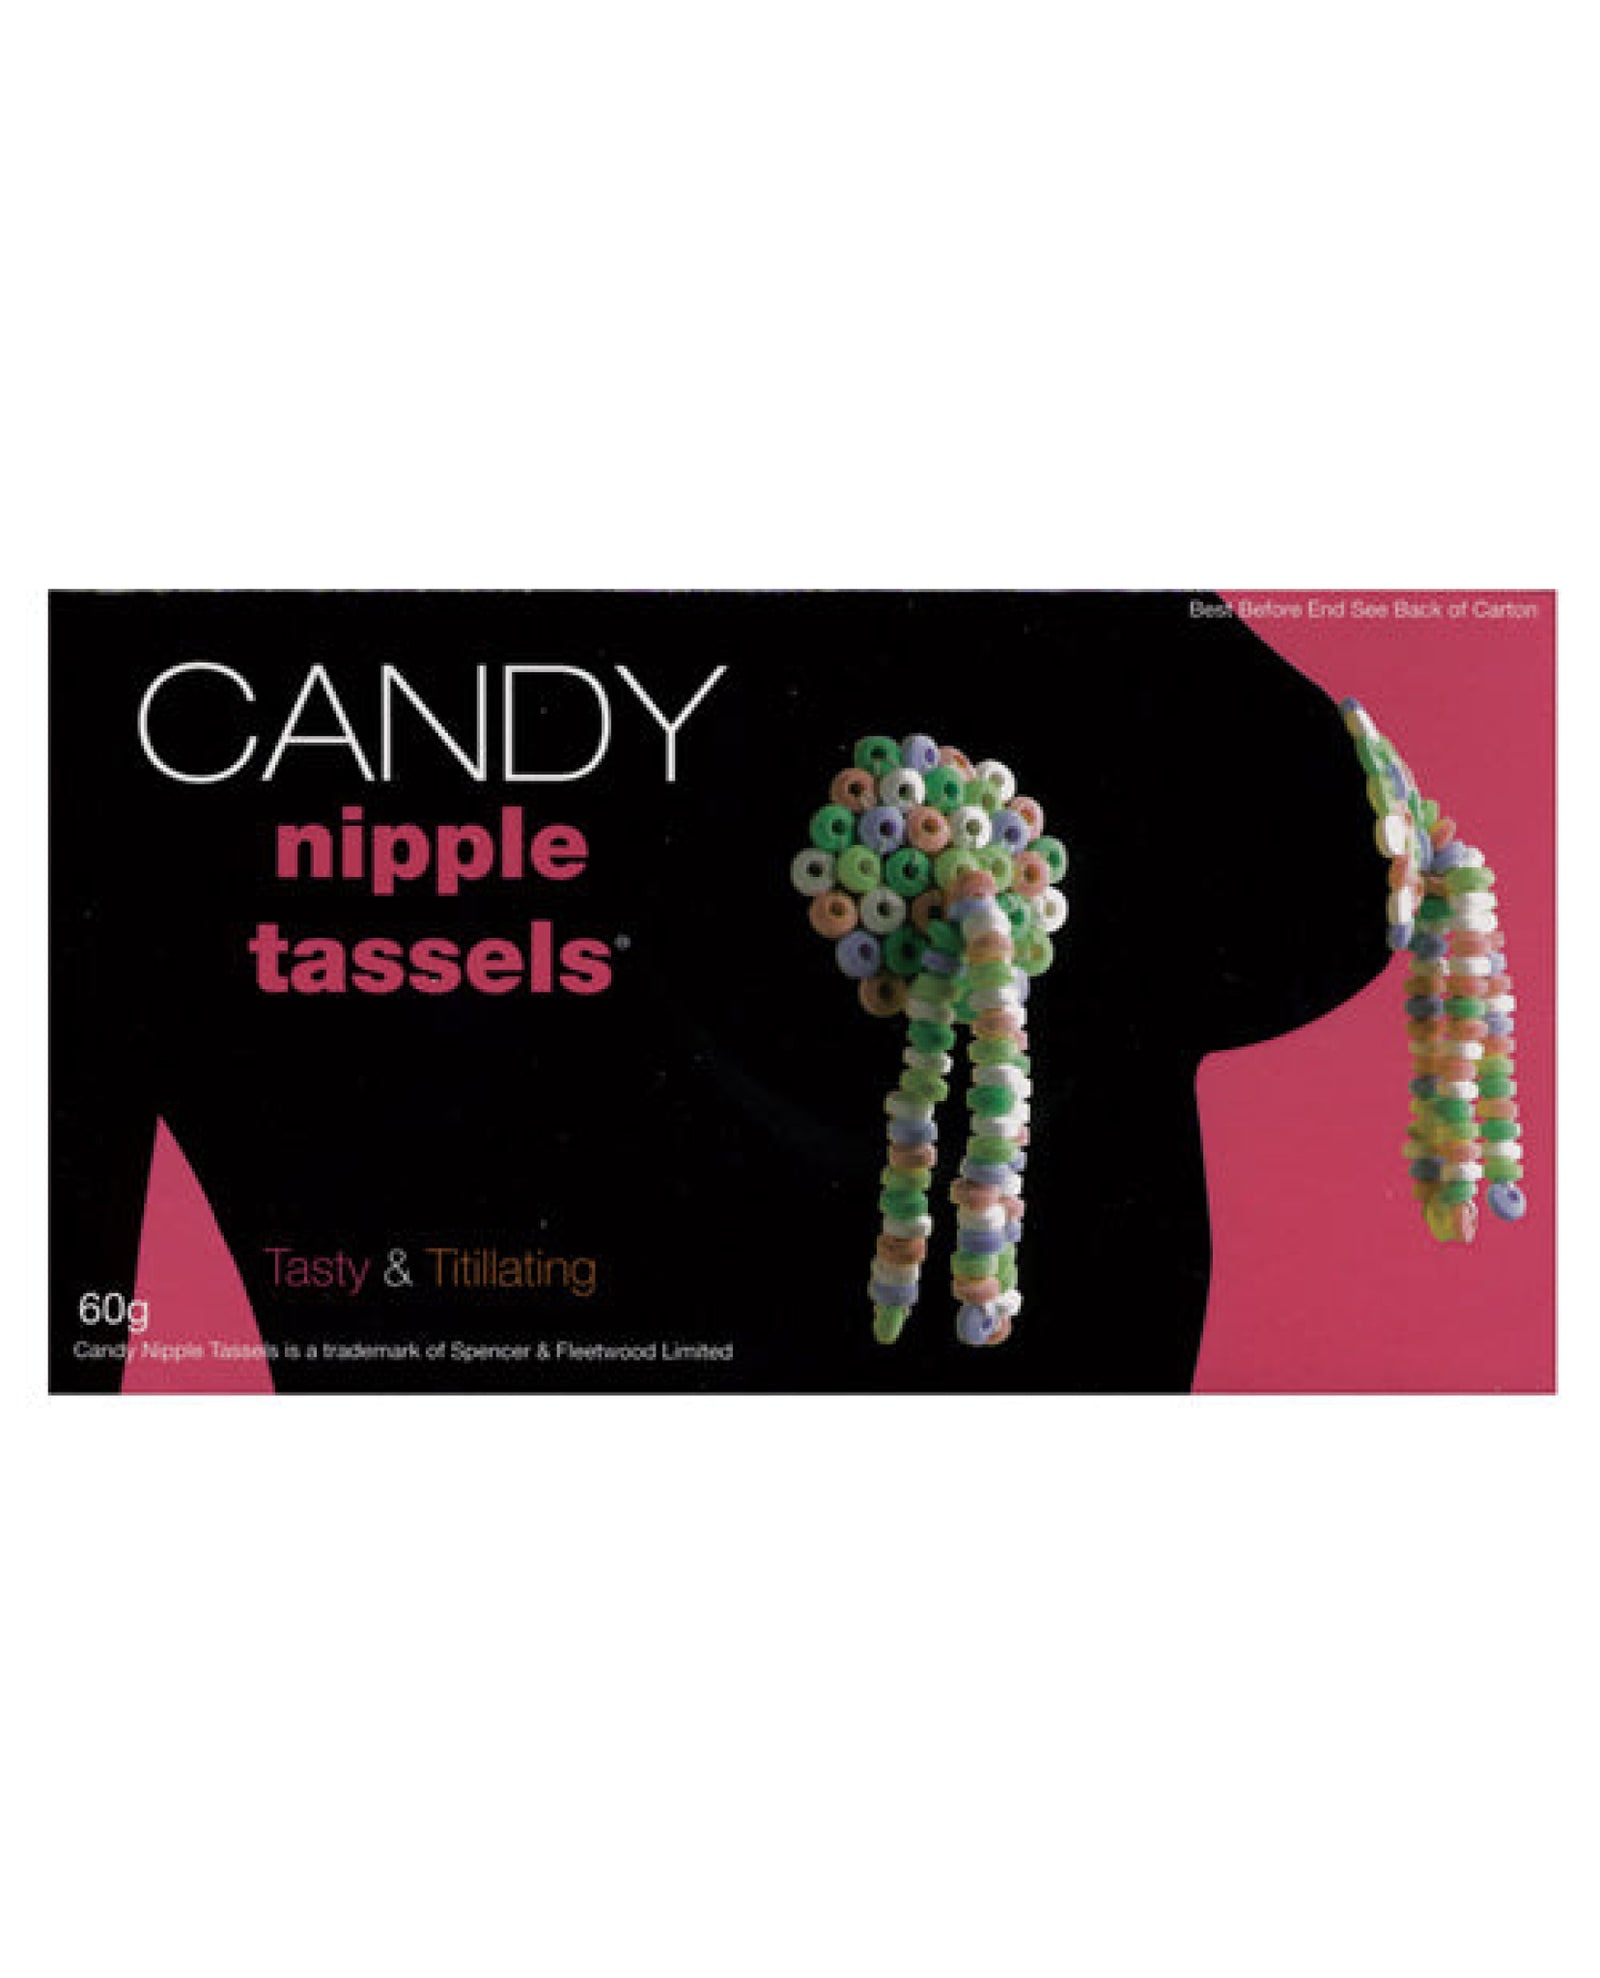 Candy Nipple Tassels Hott Products